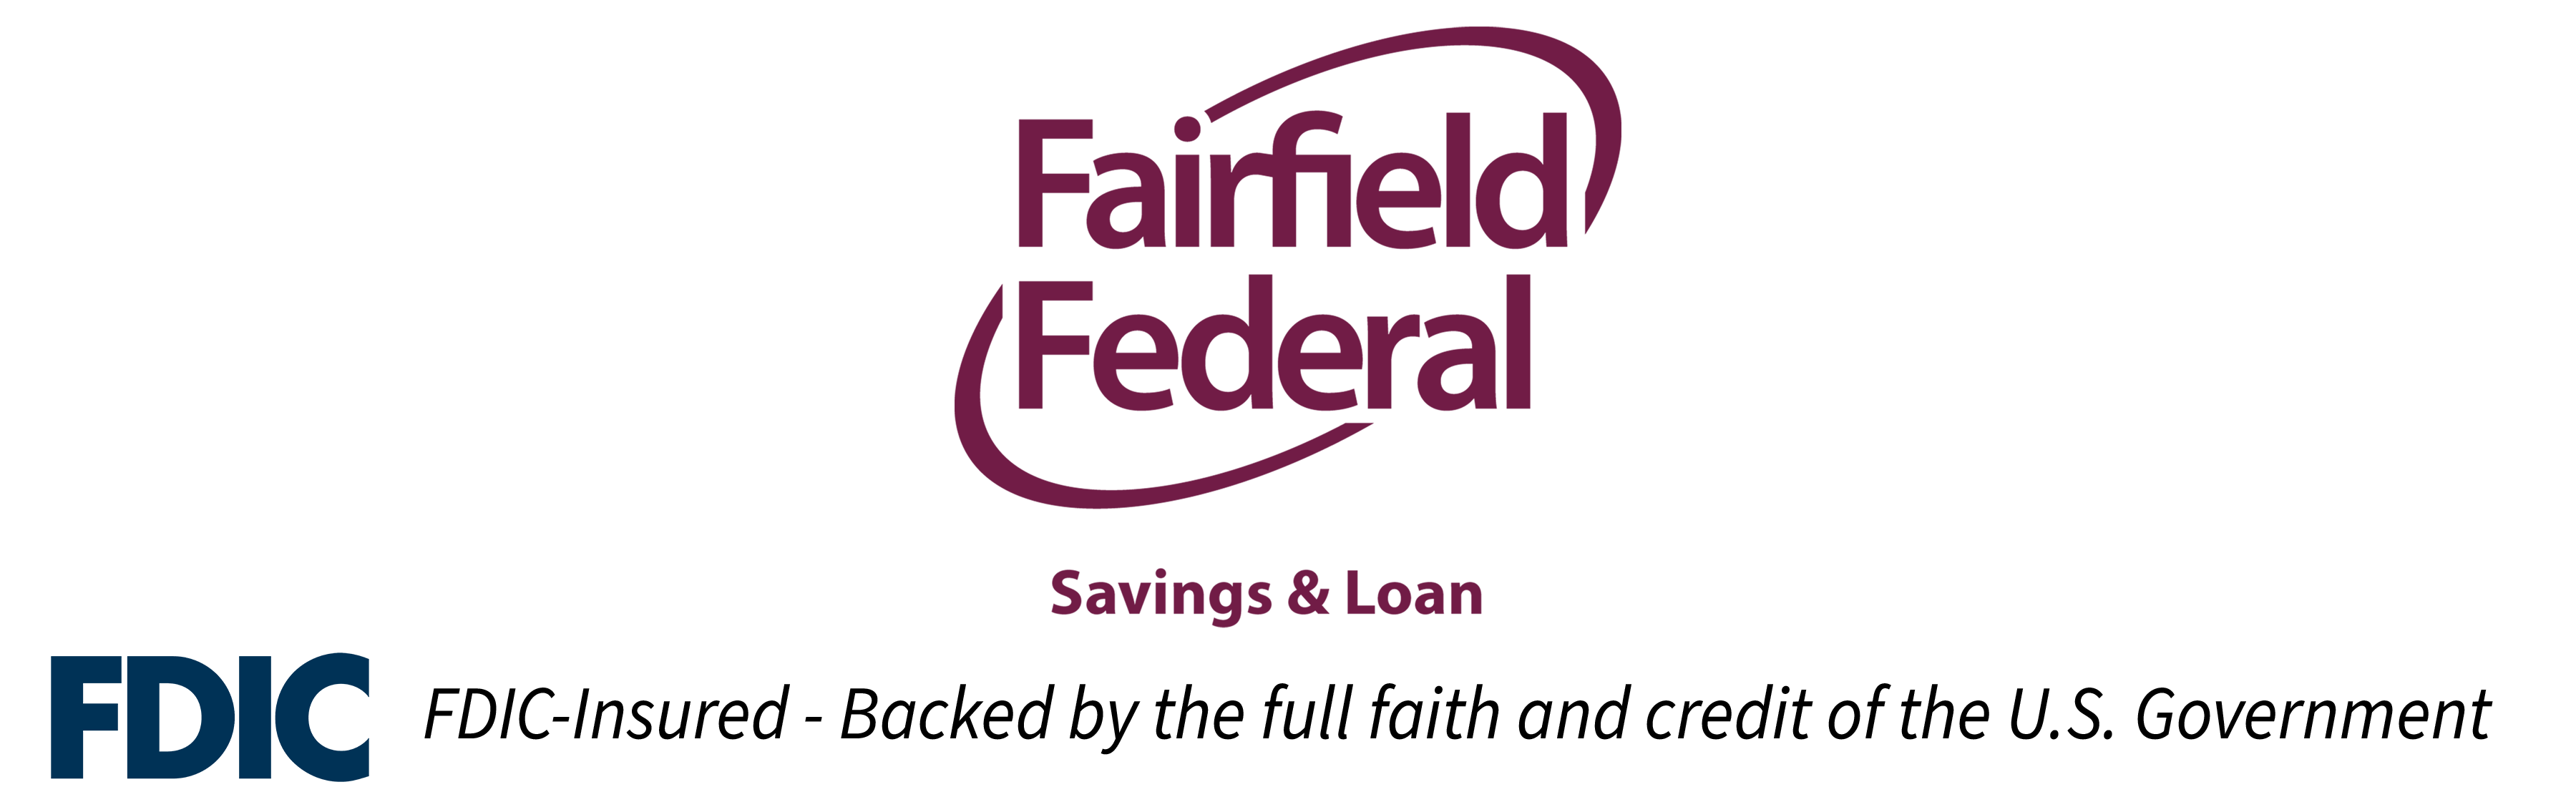 Fairfield Federal logo